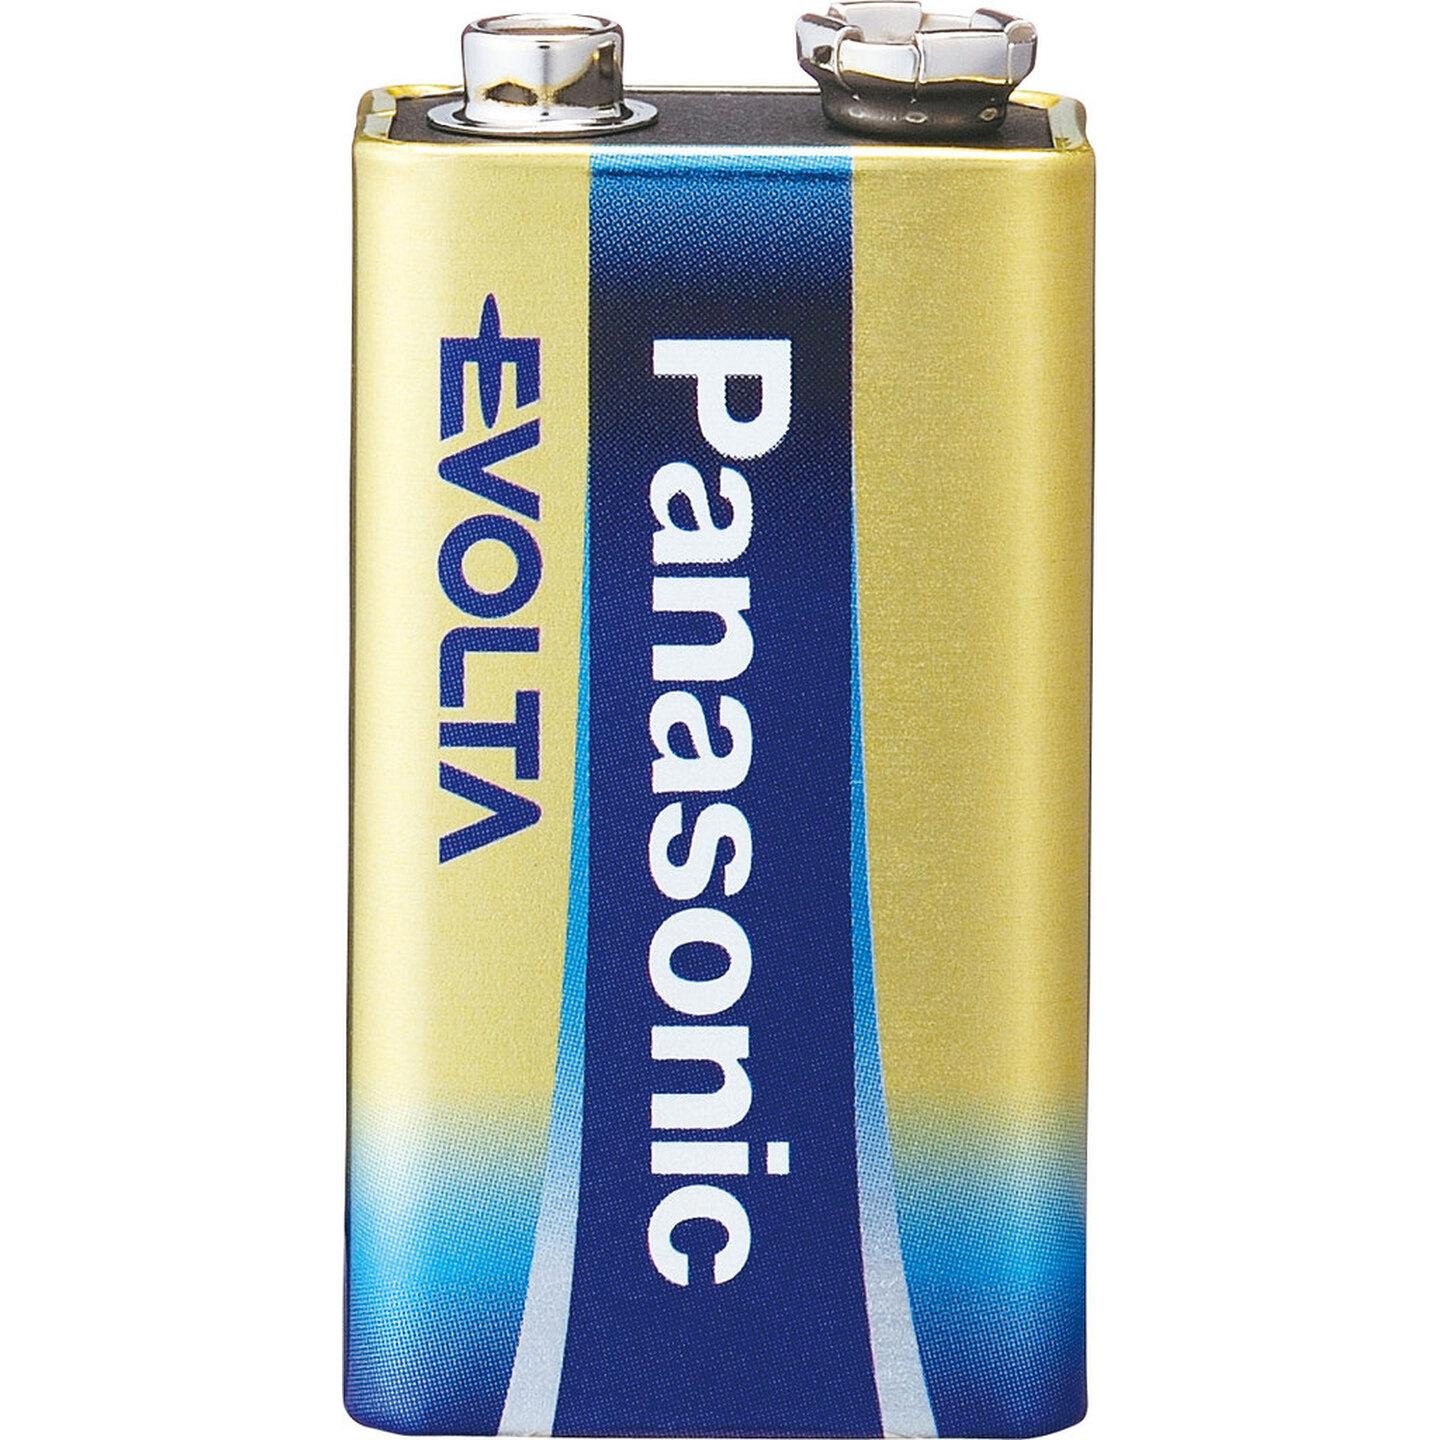 Panasonic Evolta 9V Battery - Single